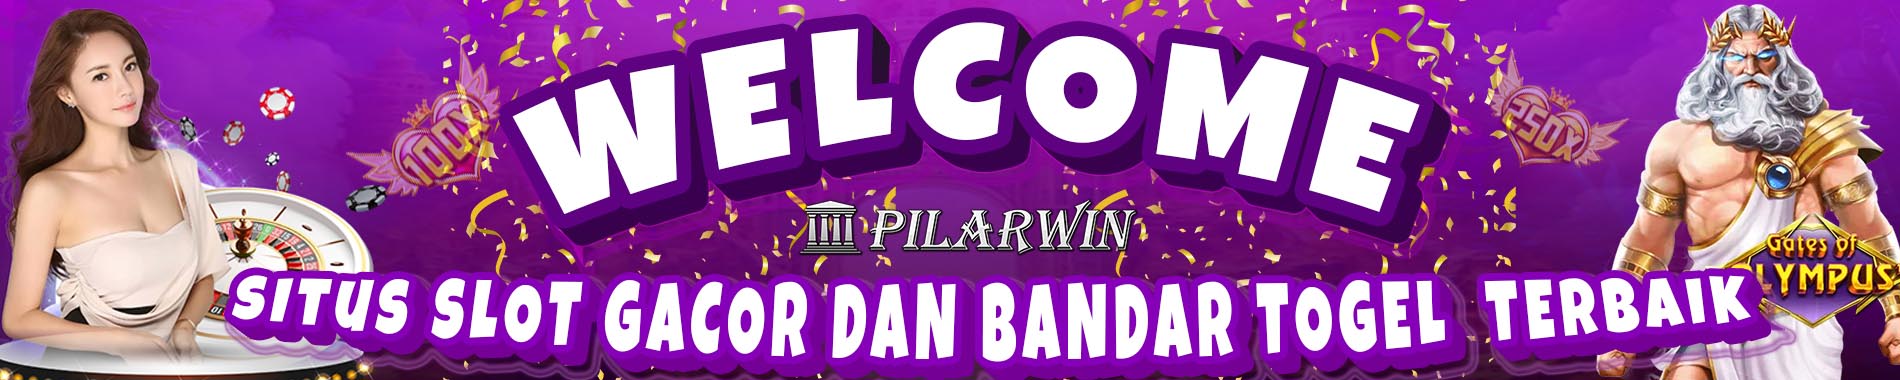 Welcome Pilarwin